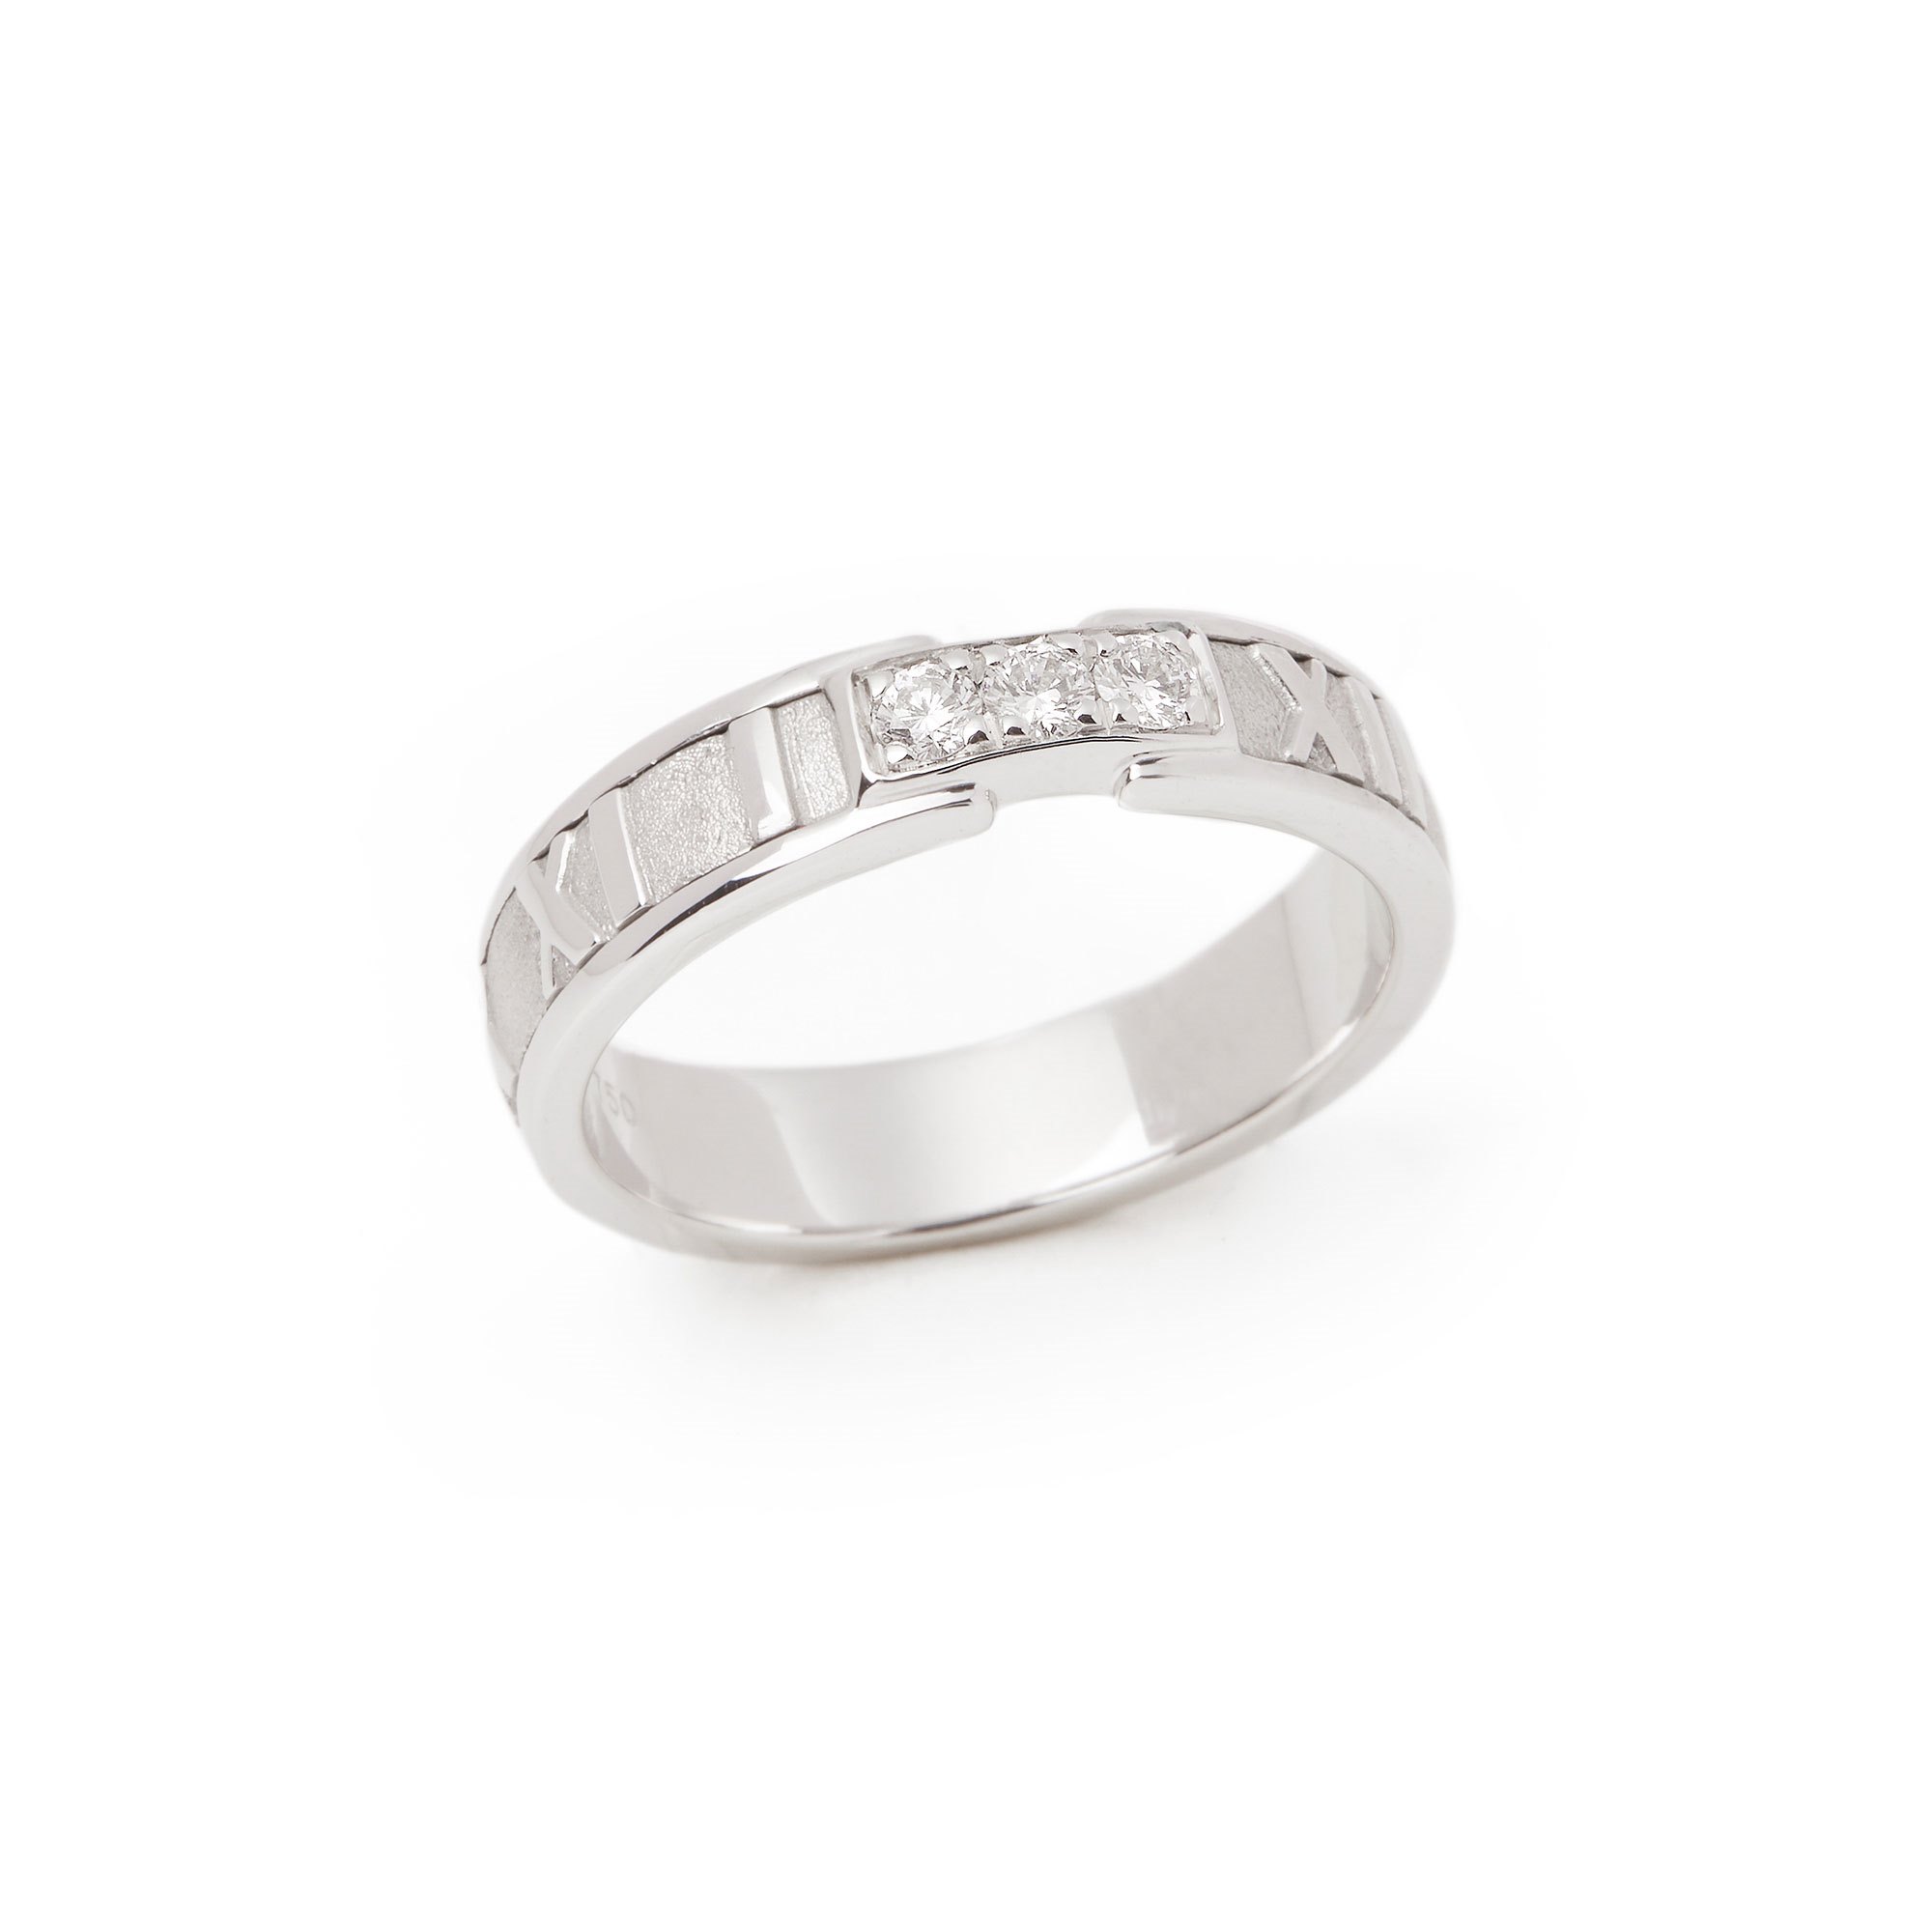 Tiffany & Co. Atlas Diamond 18ct White Gold Band Ring